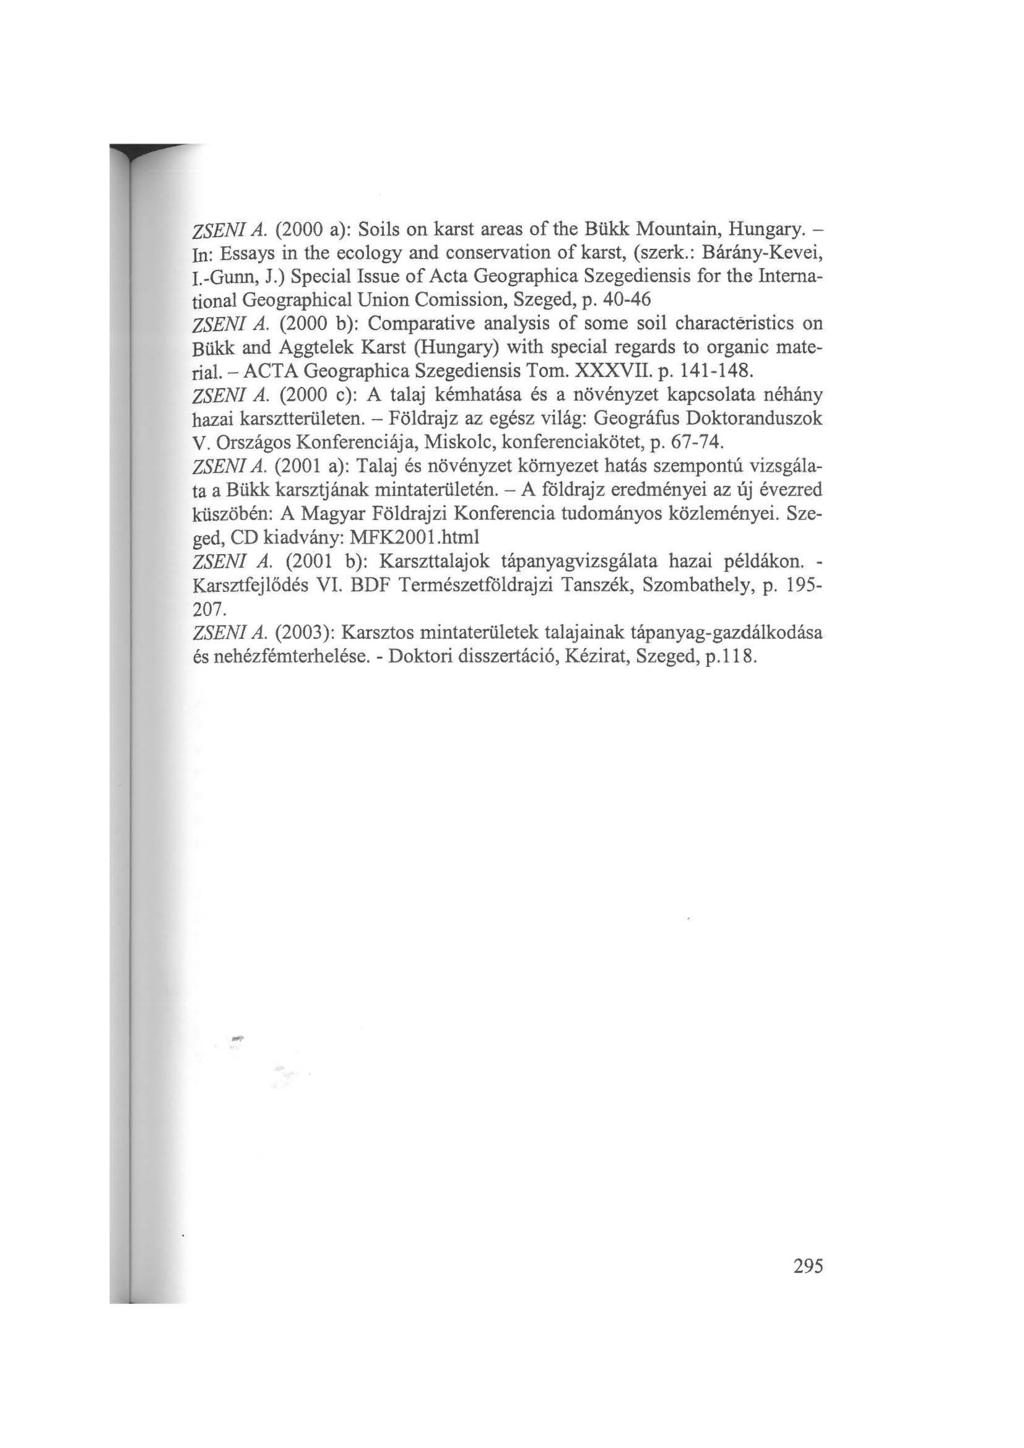 ZSENI A. (2000 a): Soils on karst areas of the Bükk Mountain, Hungary. - In: Essays in the ecology and conservation of karst, (szerk.: Bárány-Kevei, I.-Gunn, J.